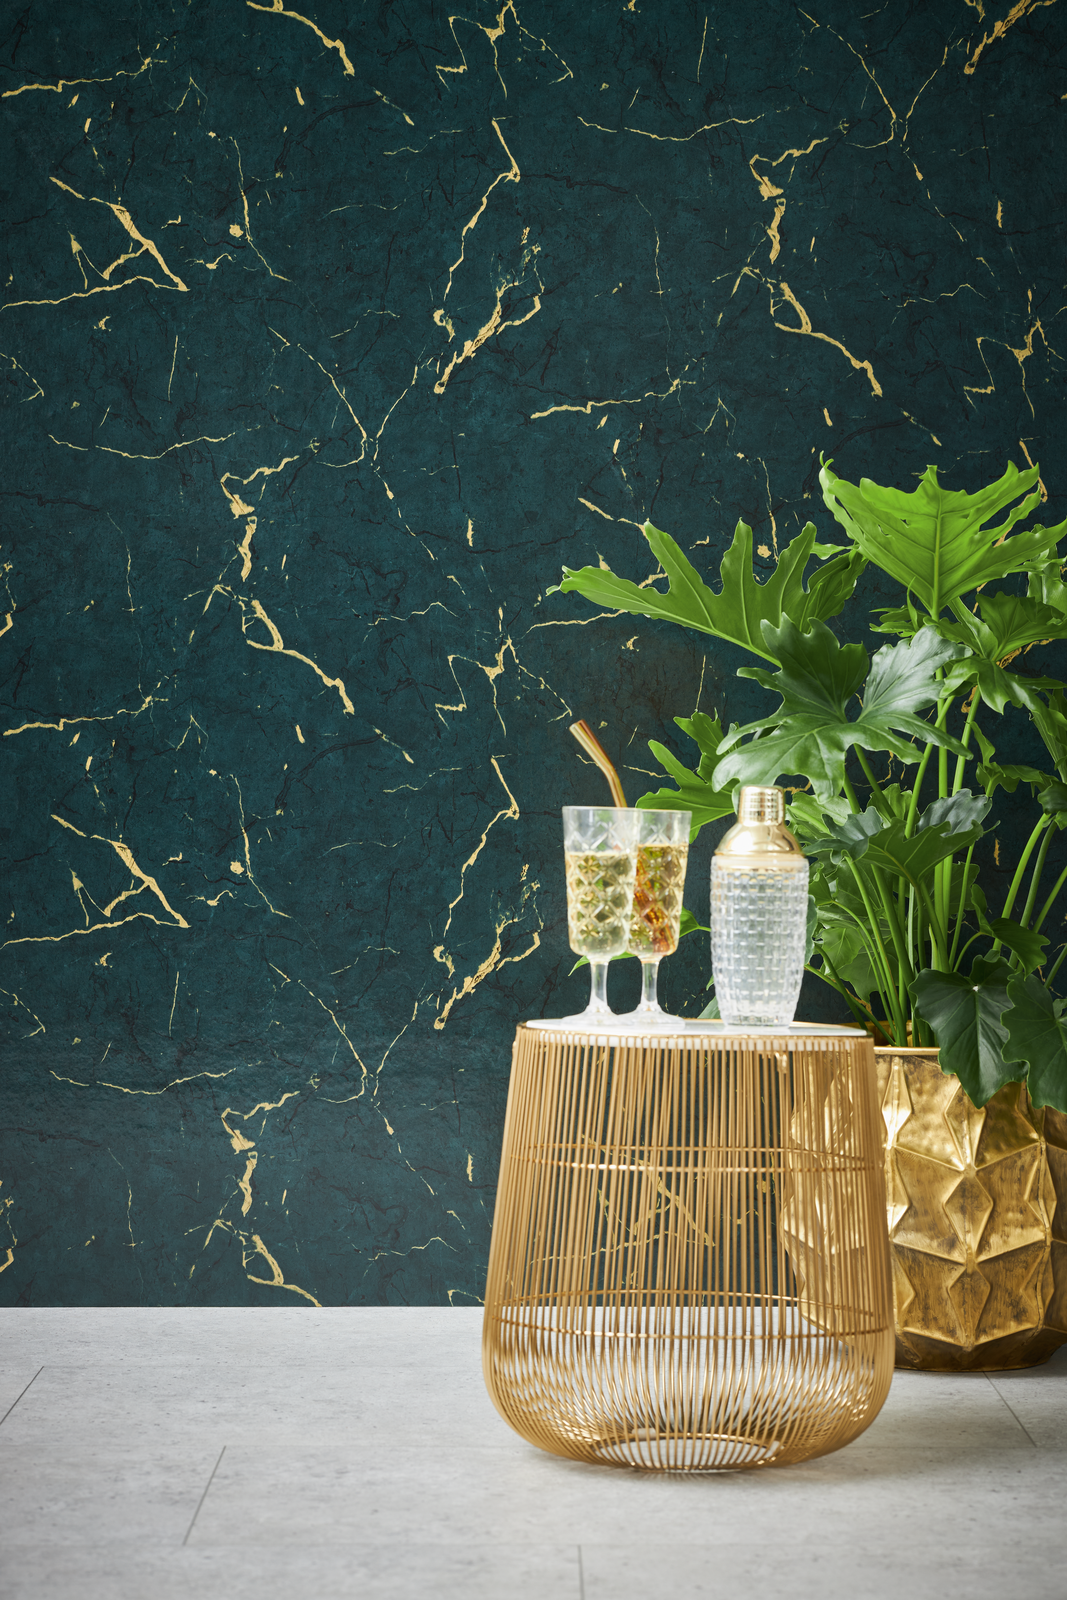             Dark green marble wallpaper with noble gloss effect - green, metallic
        